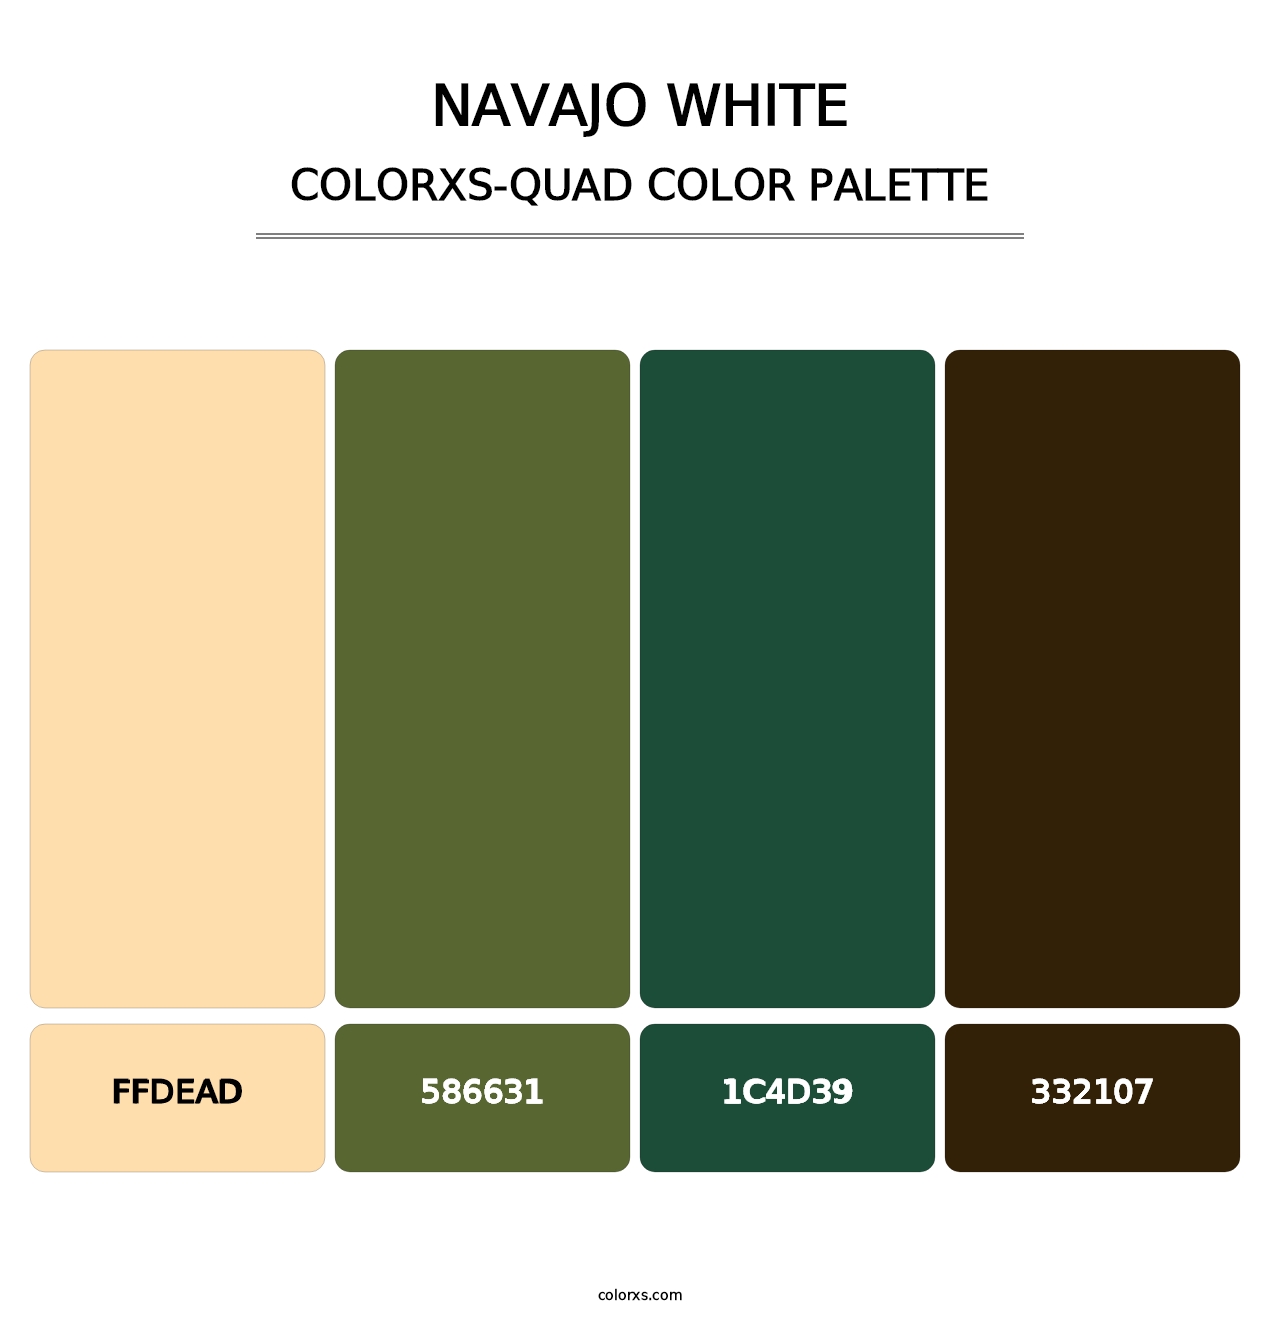 Navajo White - Colorxs Quad Palette